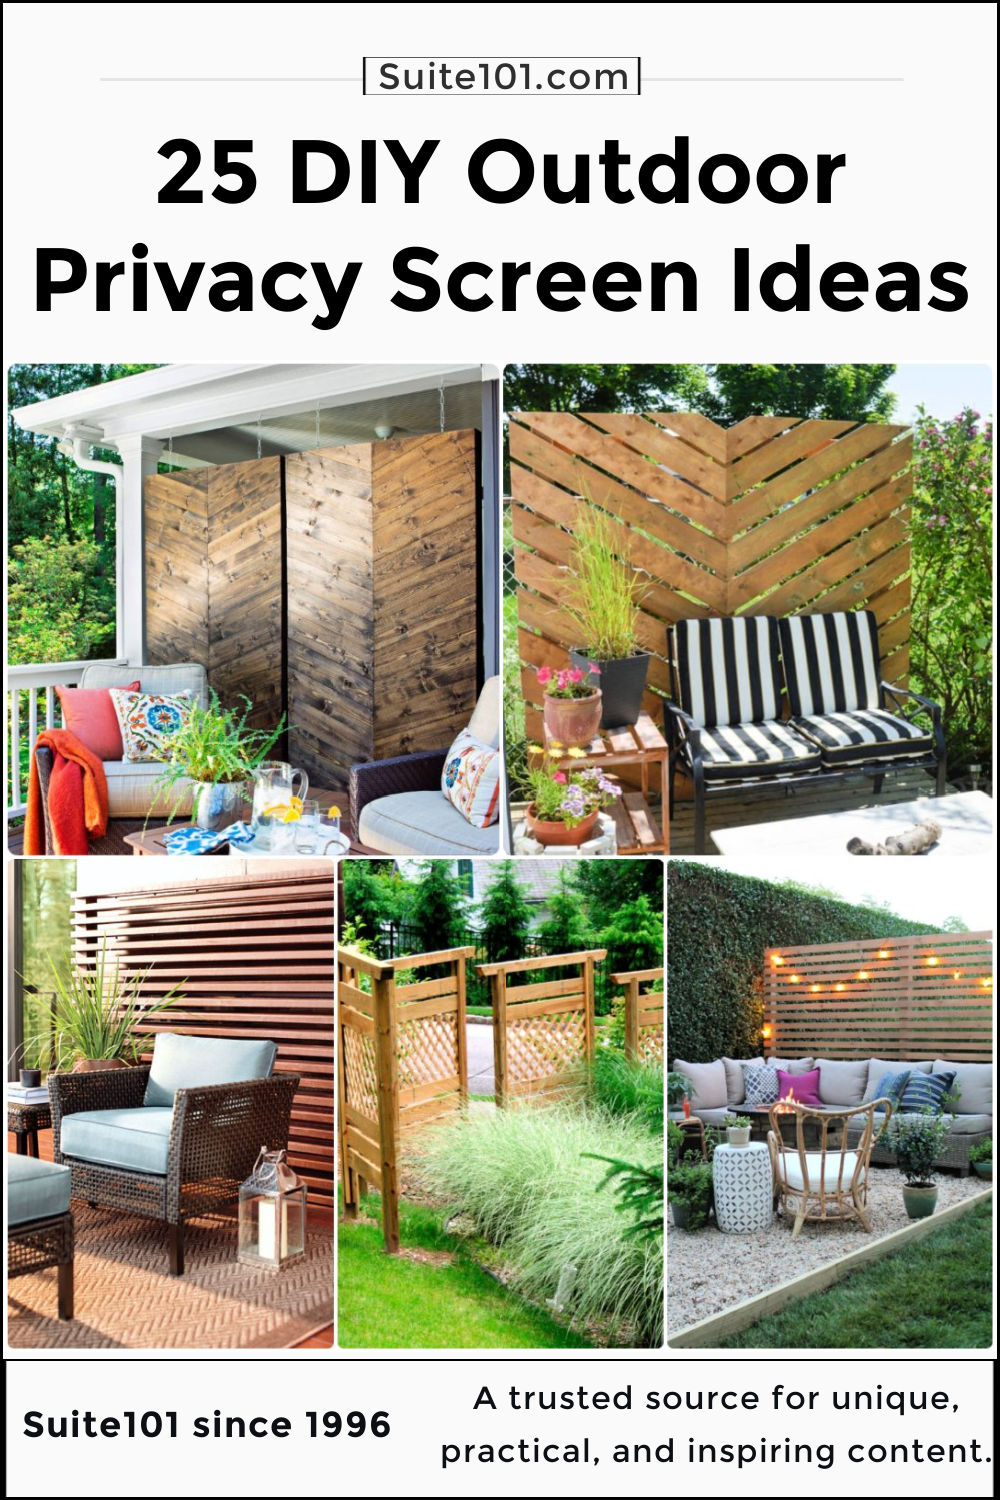 Build an Outdoor Privacy Screen